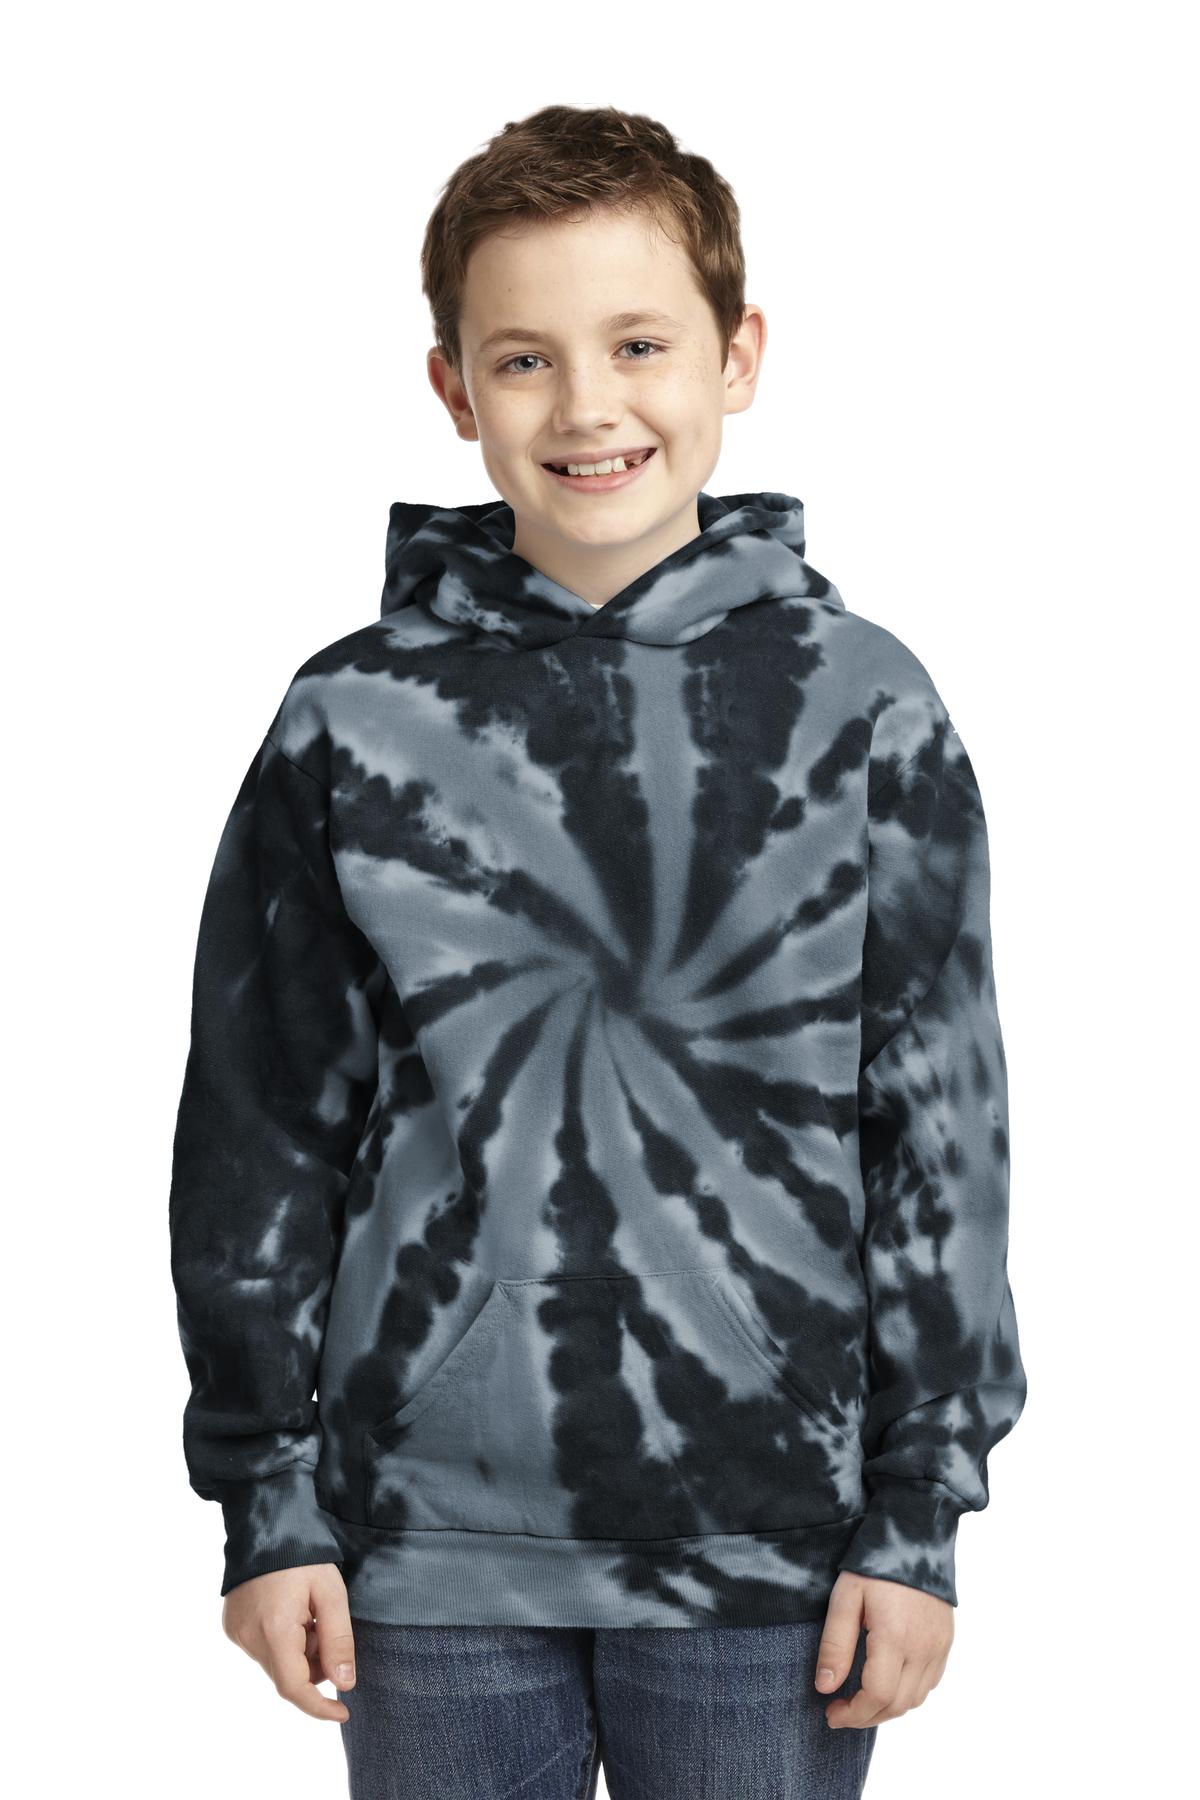 Port & Company Youth Sweatshirts & Fleece for Hospitality ® Youth Tie-Dye Pullover Hooded Sweatshirt.-Port & Company